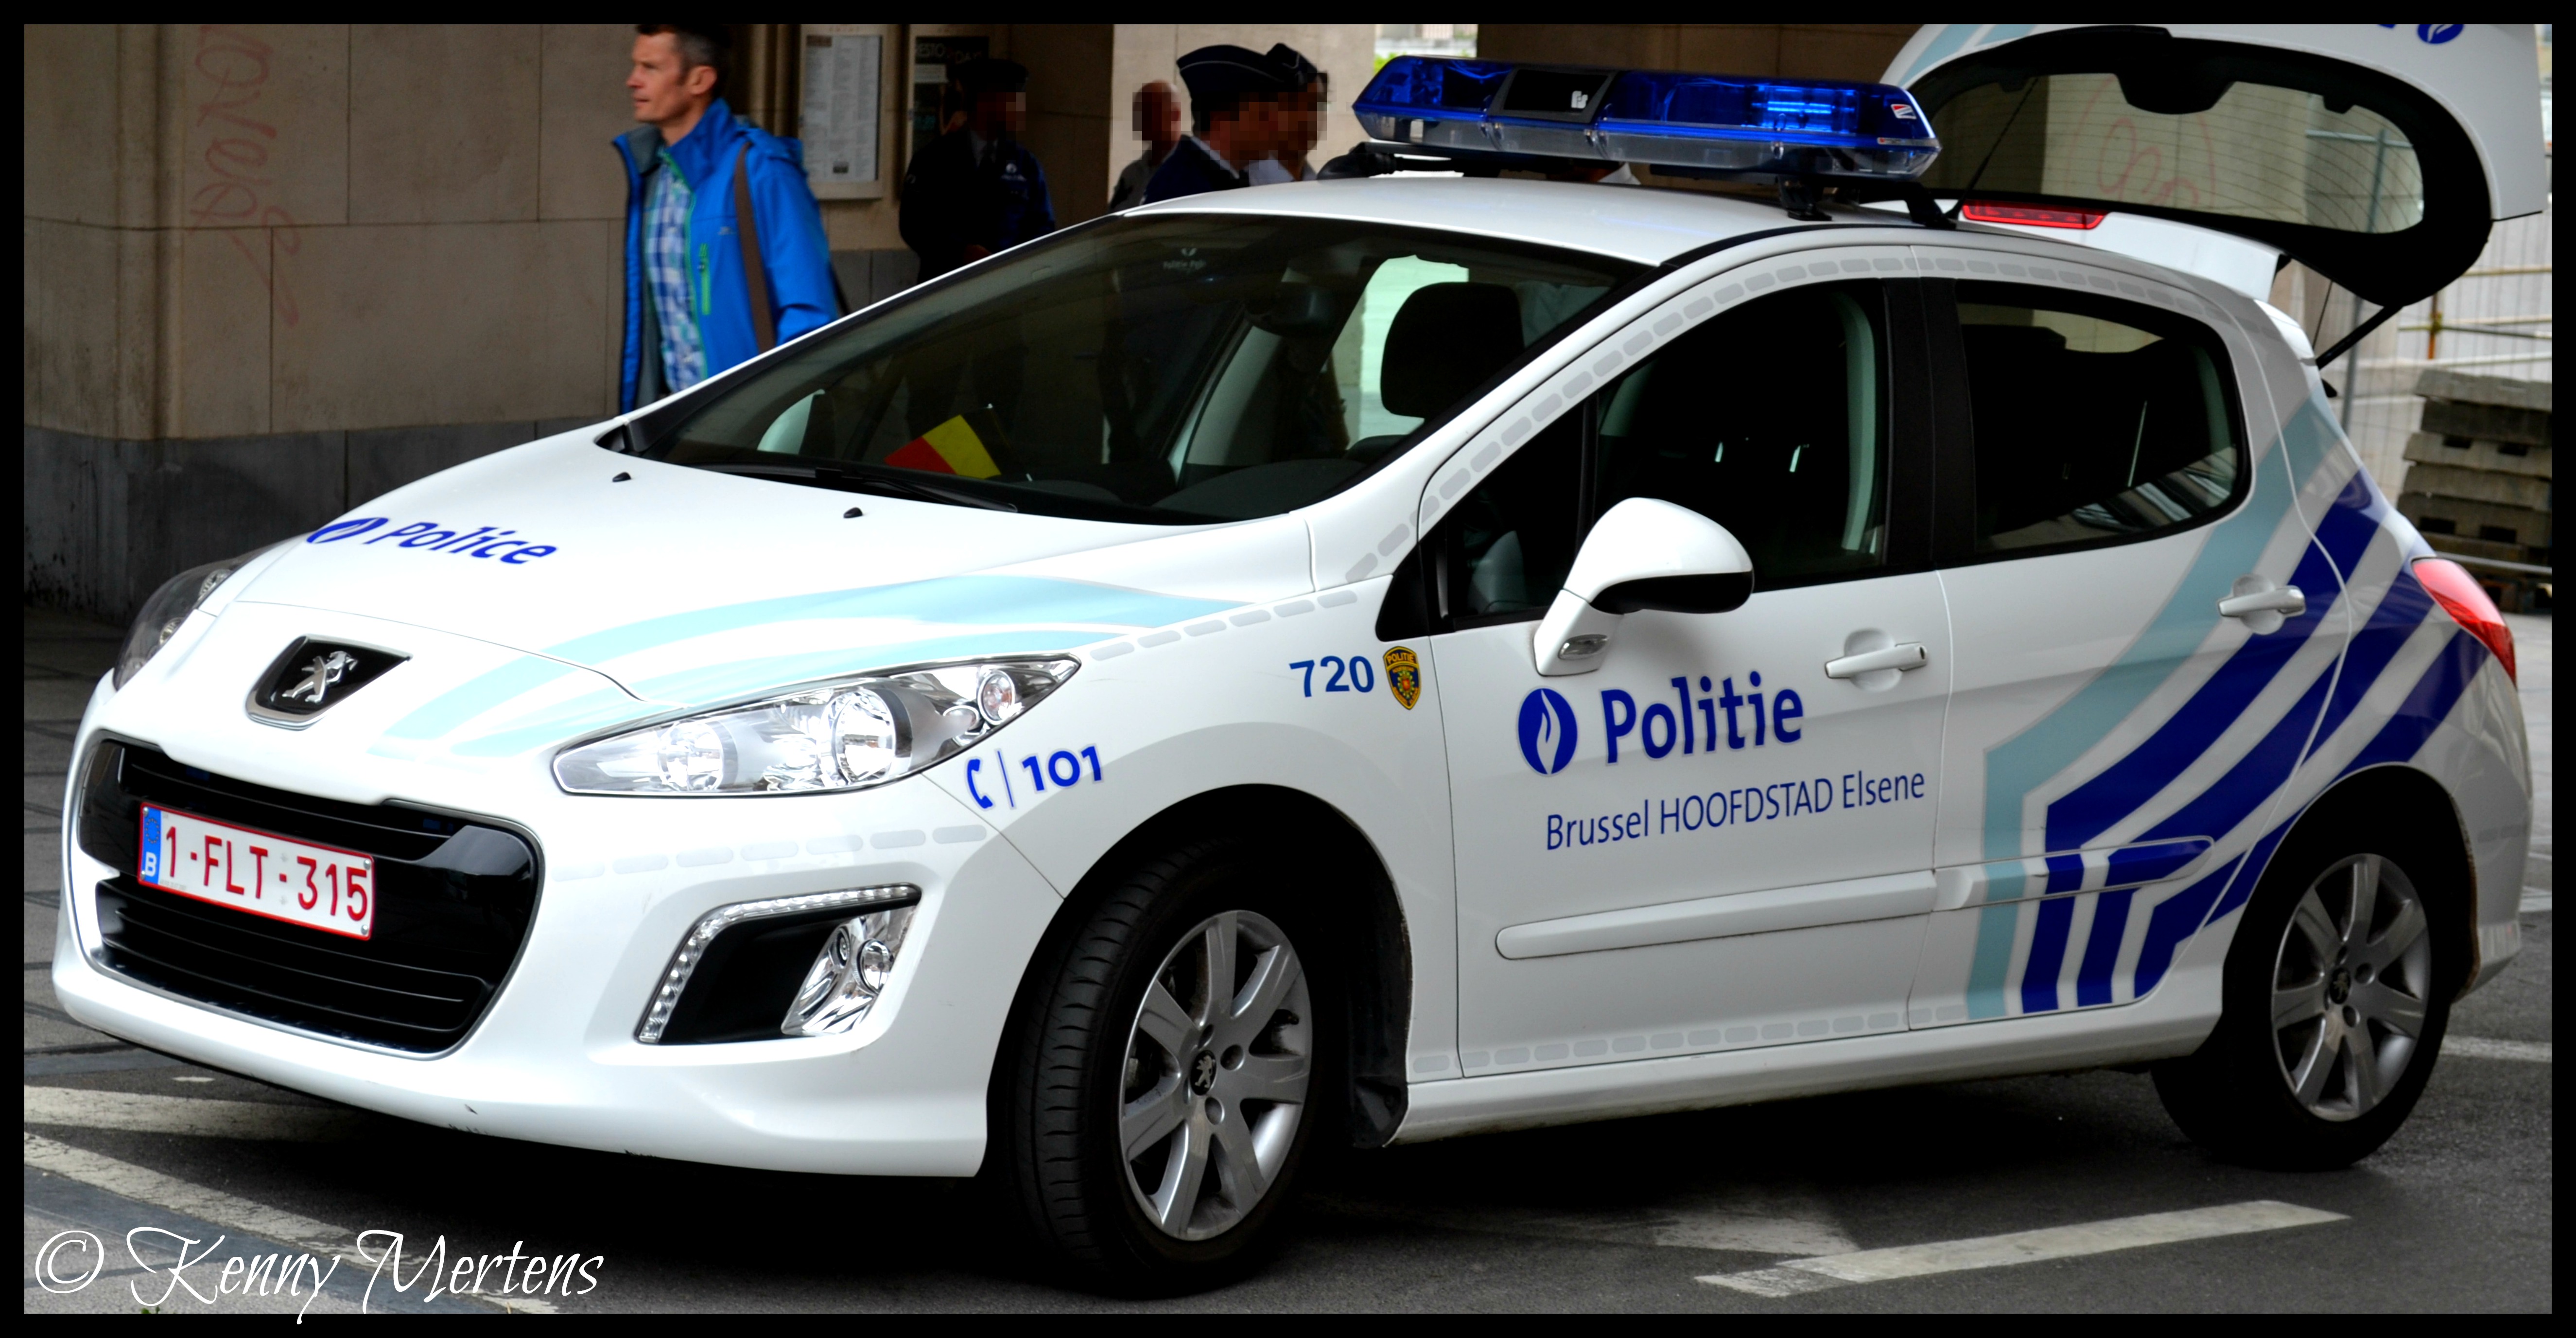 Zone de police Bruxelles Capitale Ixelles (ZP 5339 - PolBru) - Page 3 14643417249_916cfa7201_o